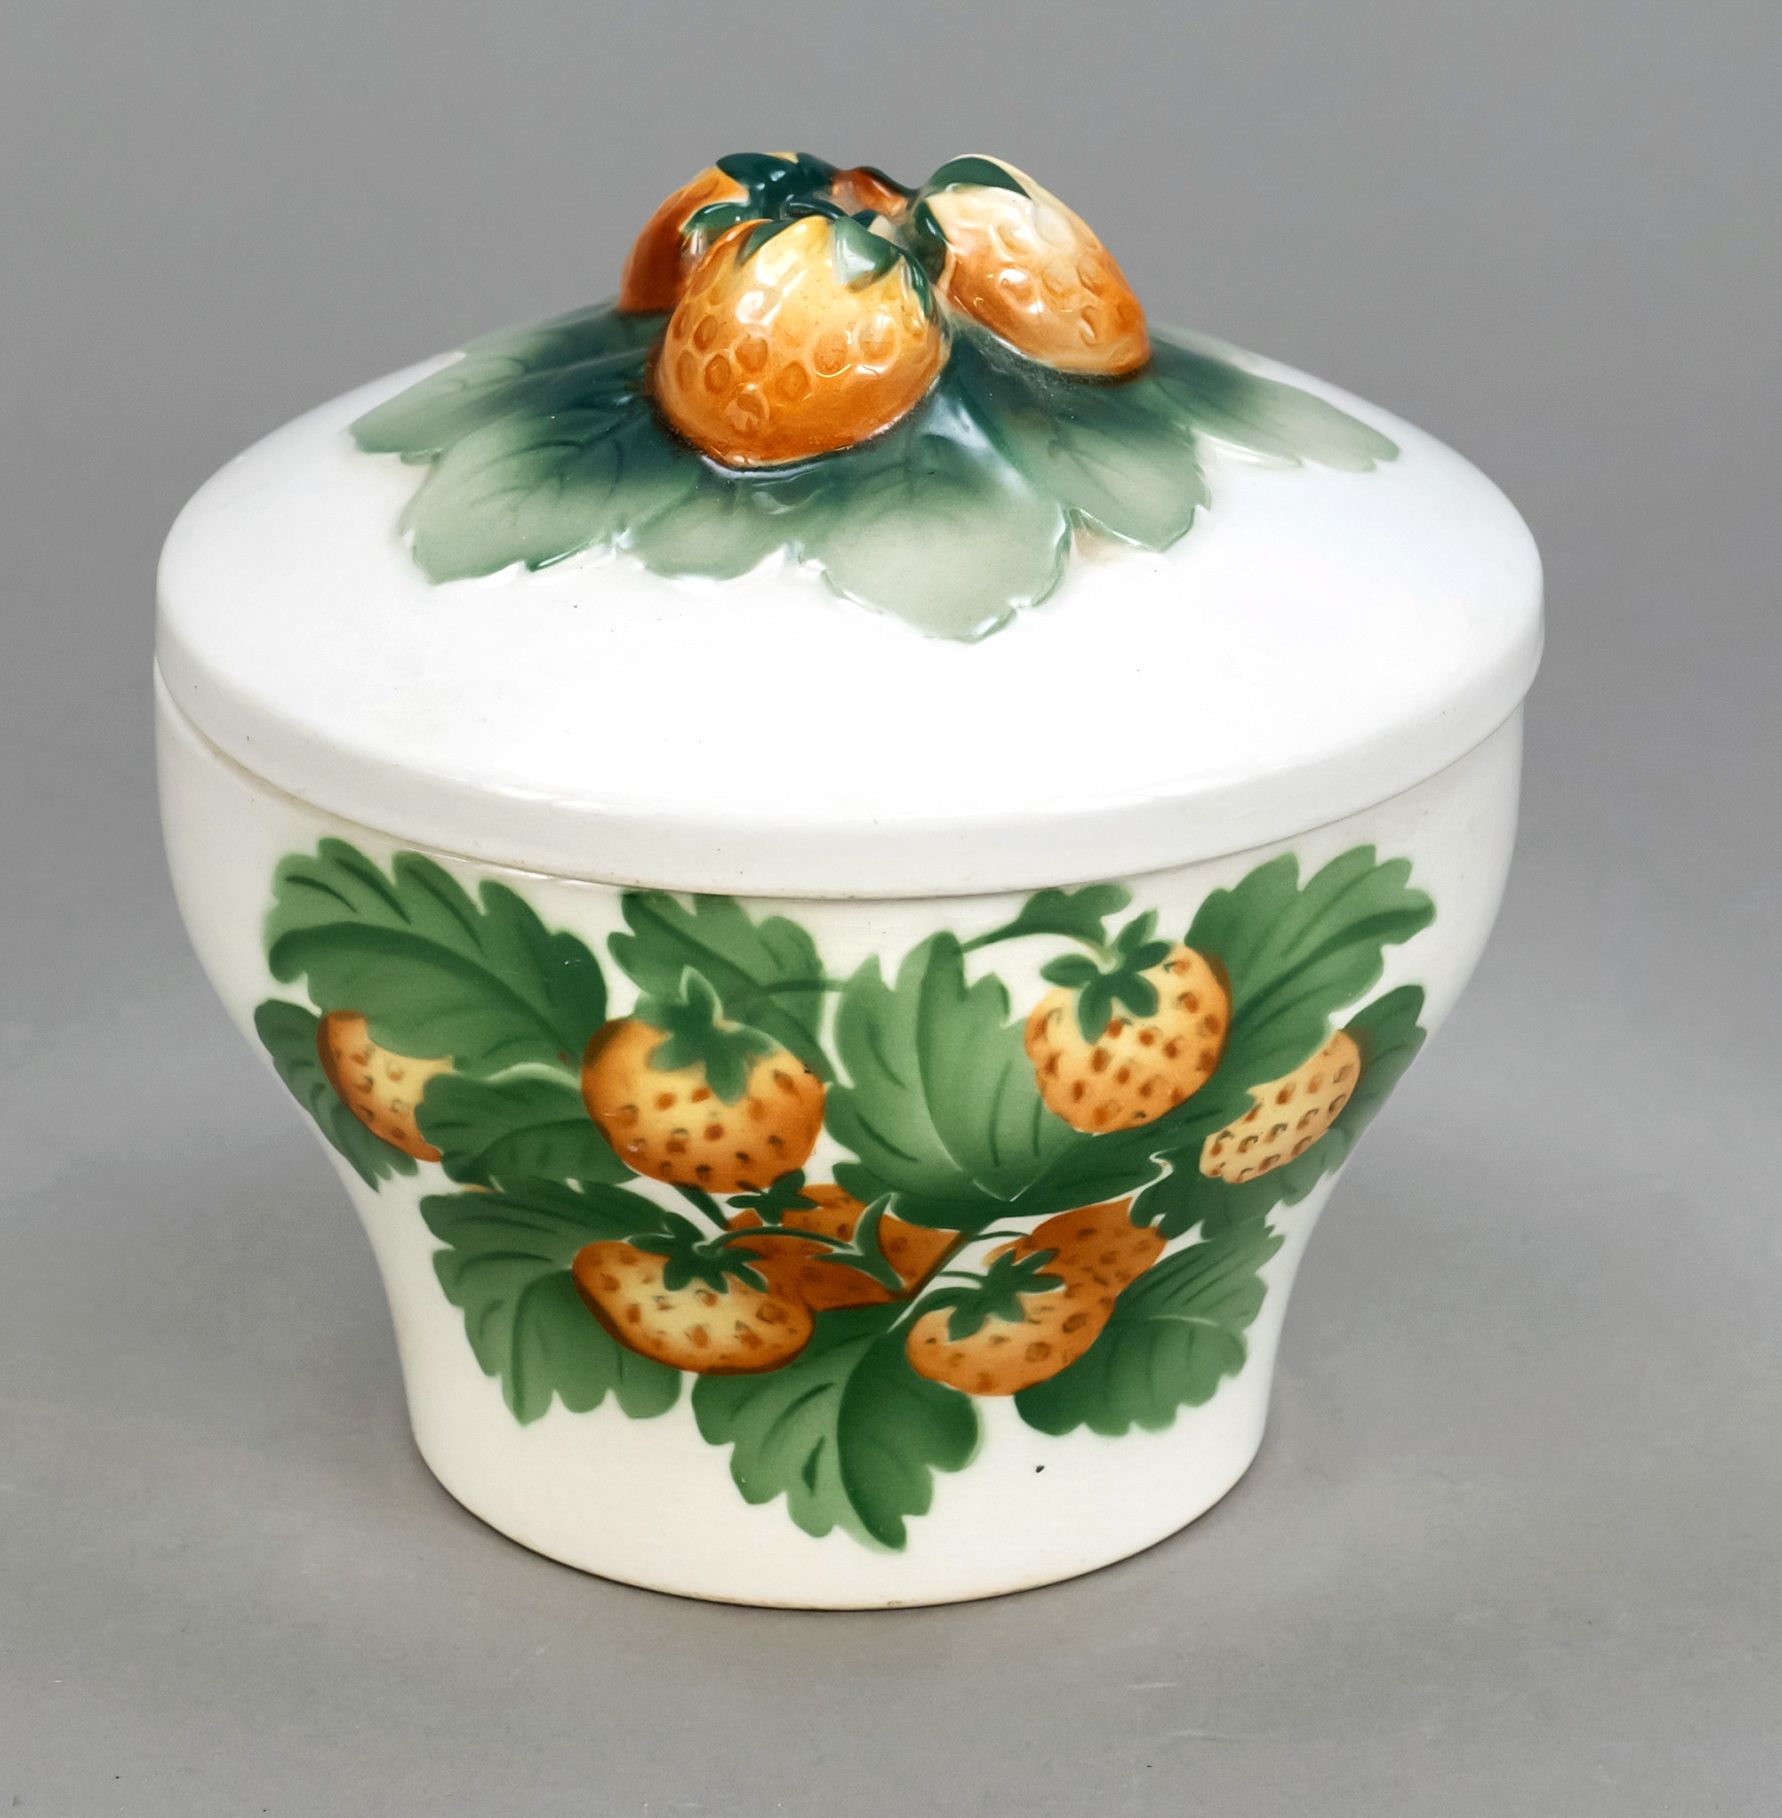 Null 圆形陶瓷果酱盒，皇家哥本哈根，1928年，圆形支架，墙面加宽，圆顶盖上有草莓形状的旋钮，有多色草莓装饰，支架上有刻字和日期，直径12厘米